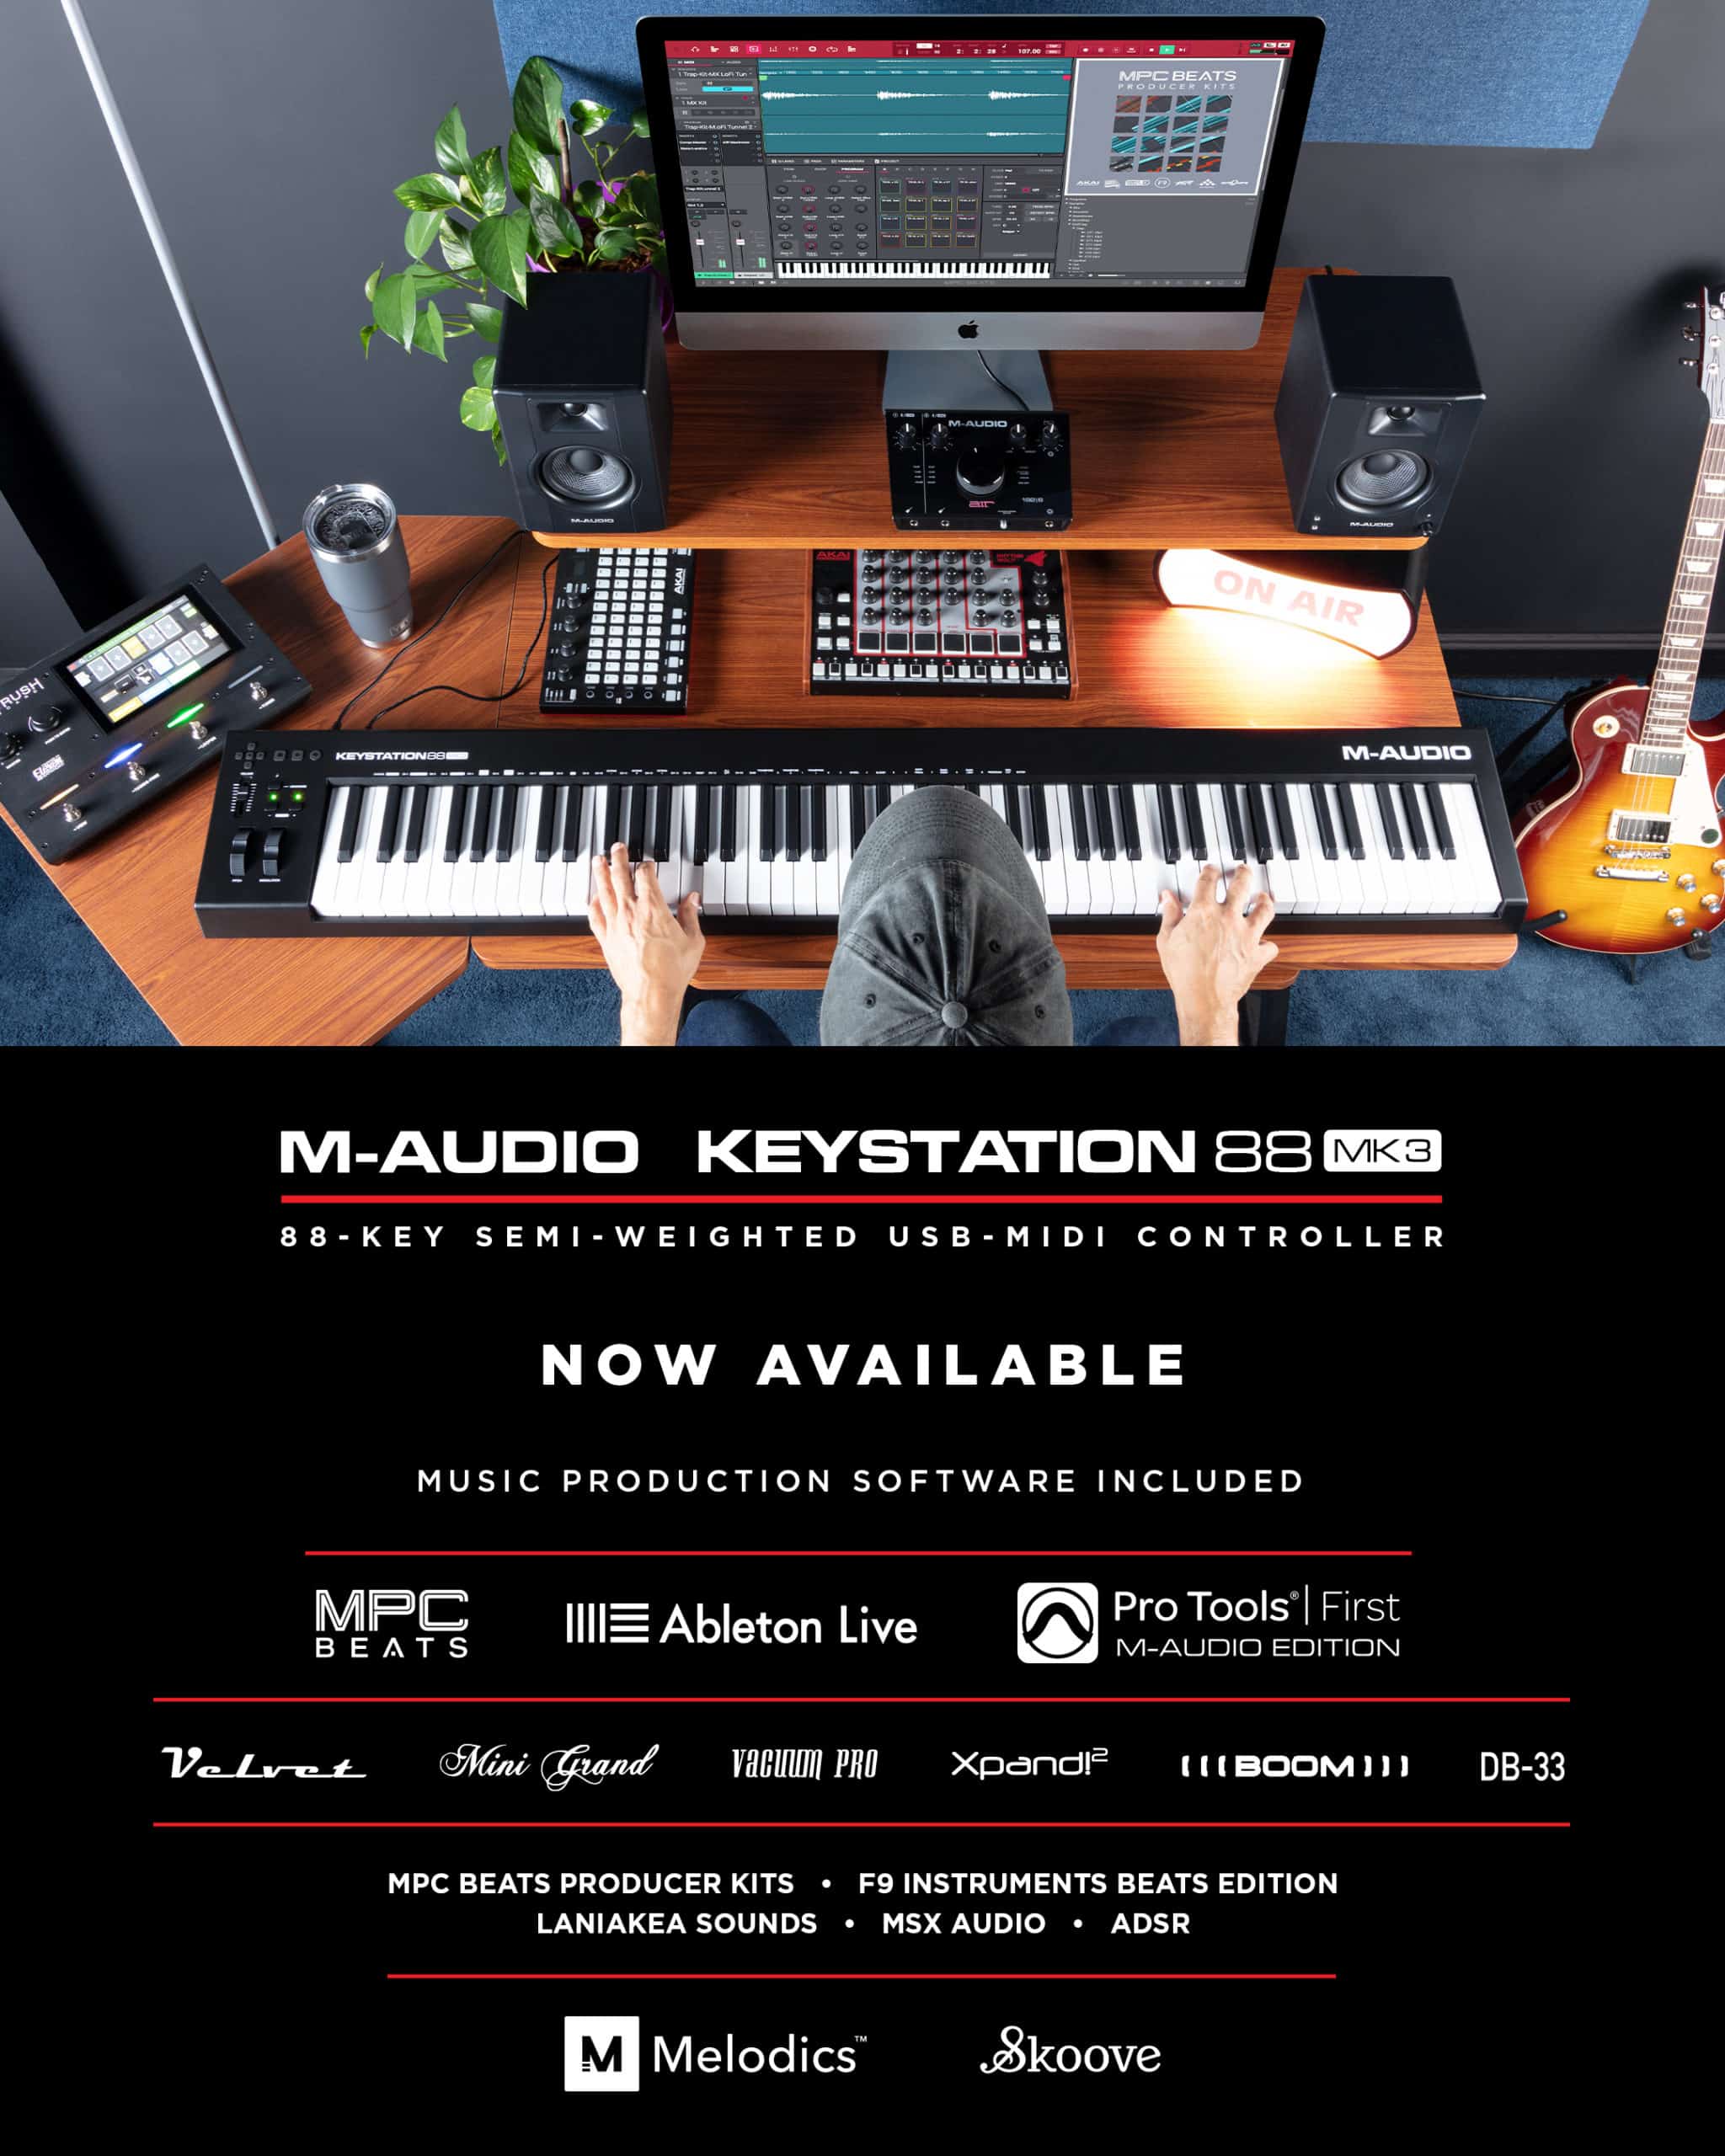 M-Audio Launches Keystation 88 MK3